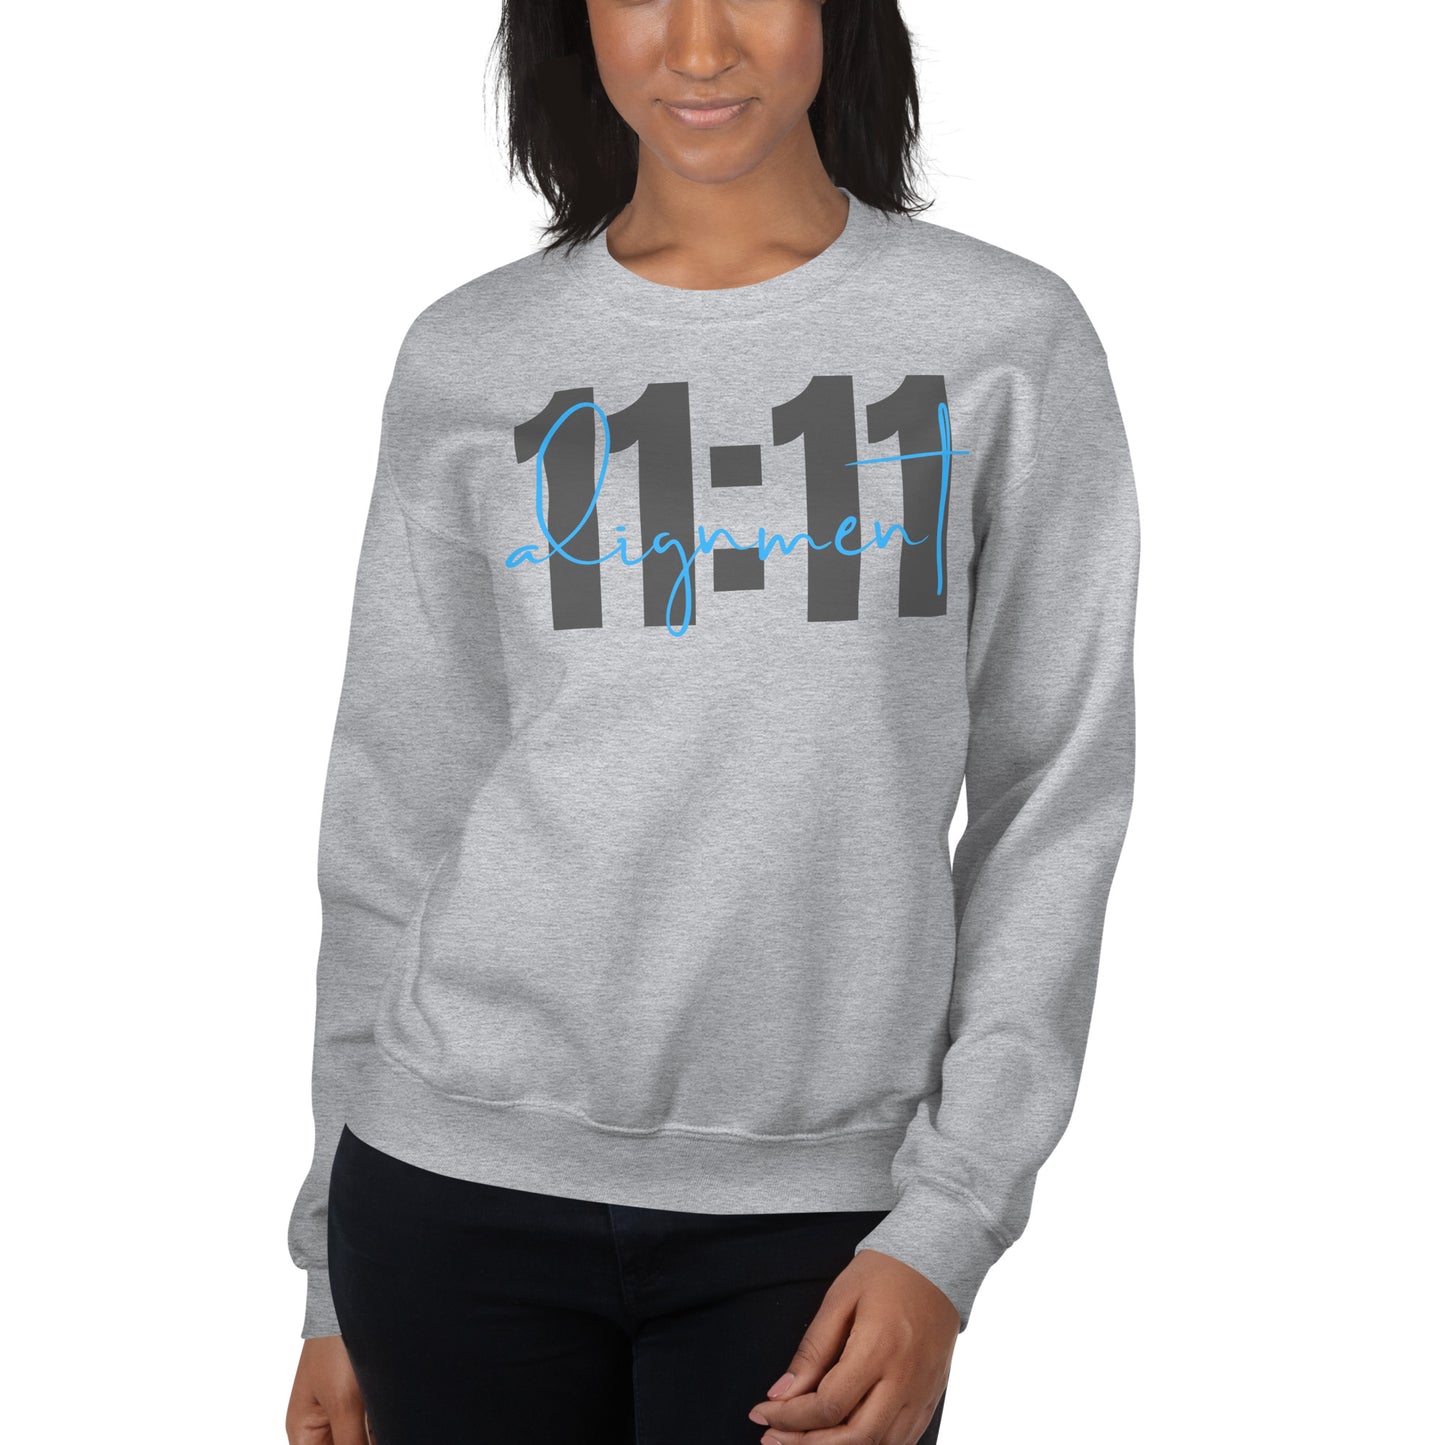 11:11 Alignment Unisex Sweatshirt